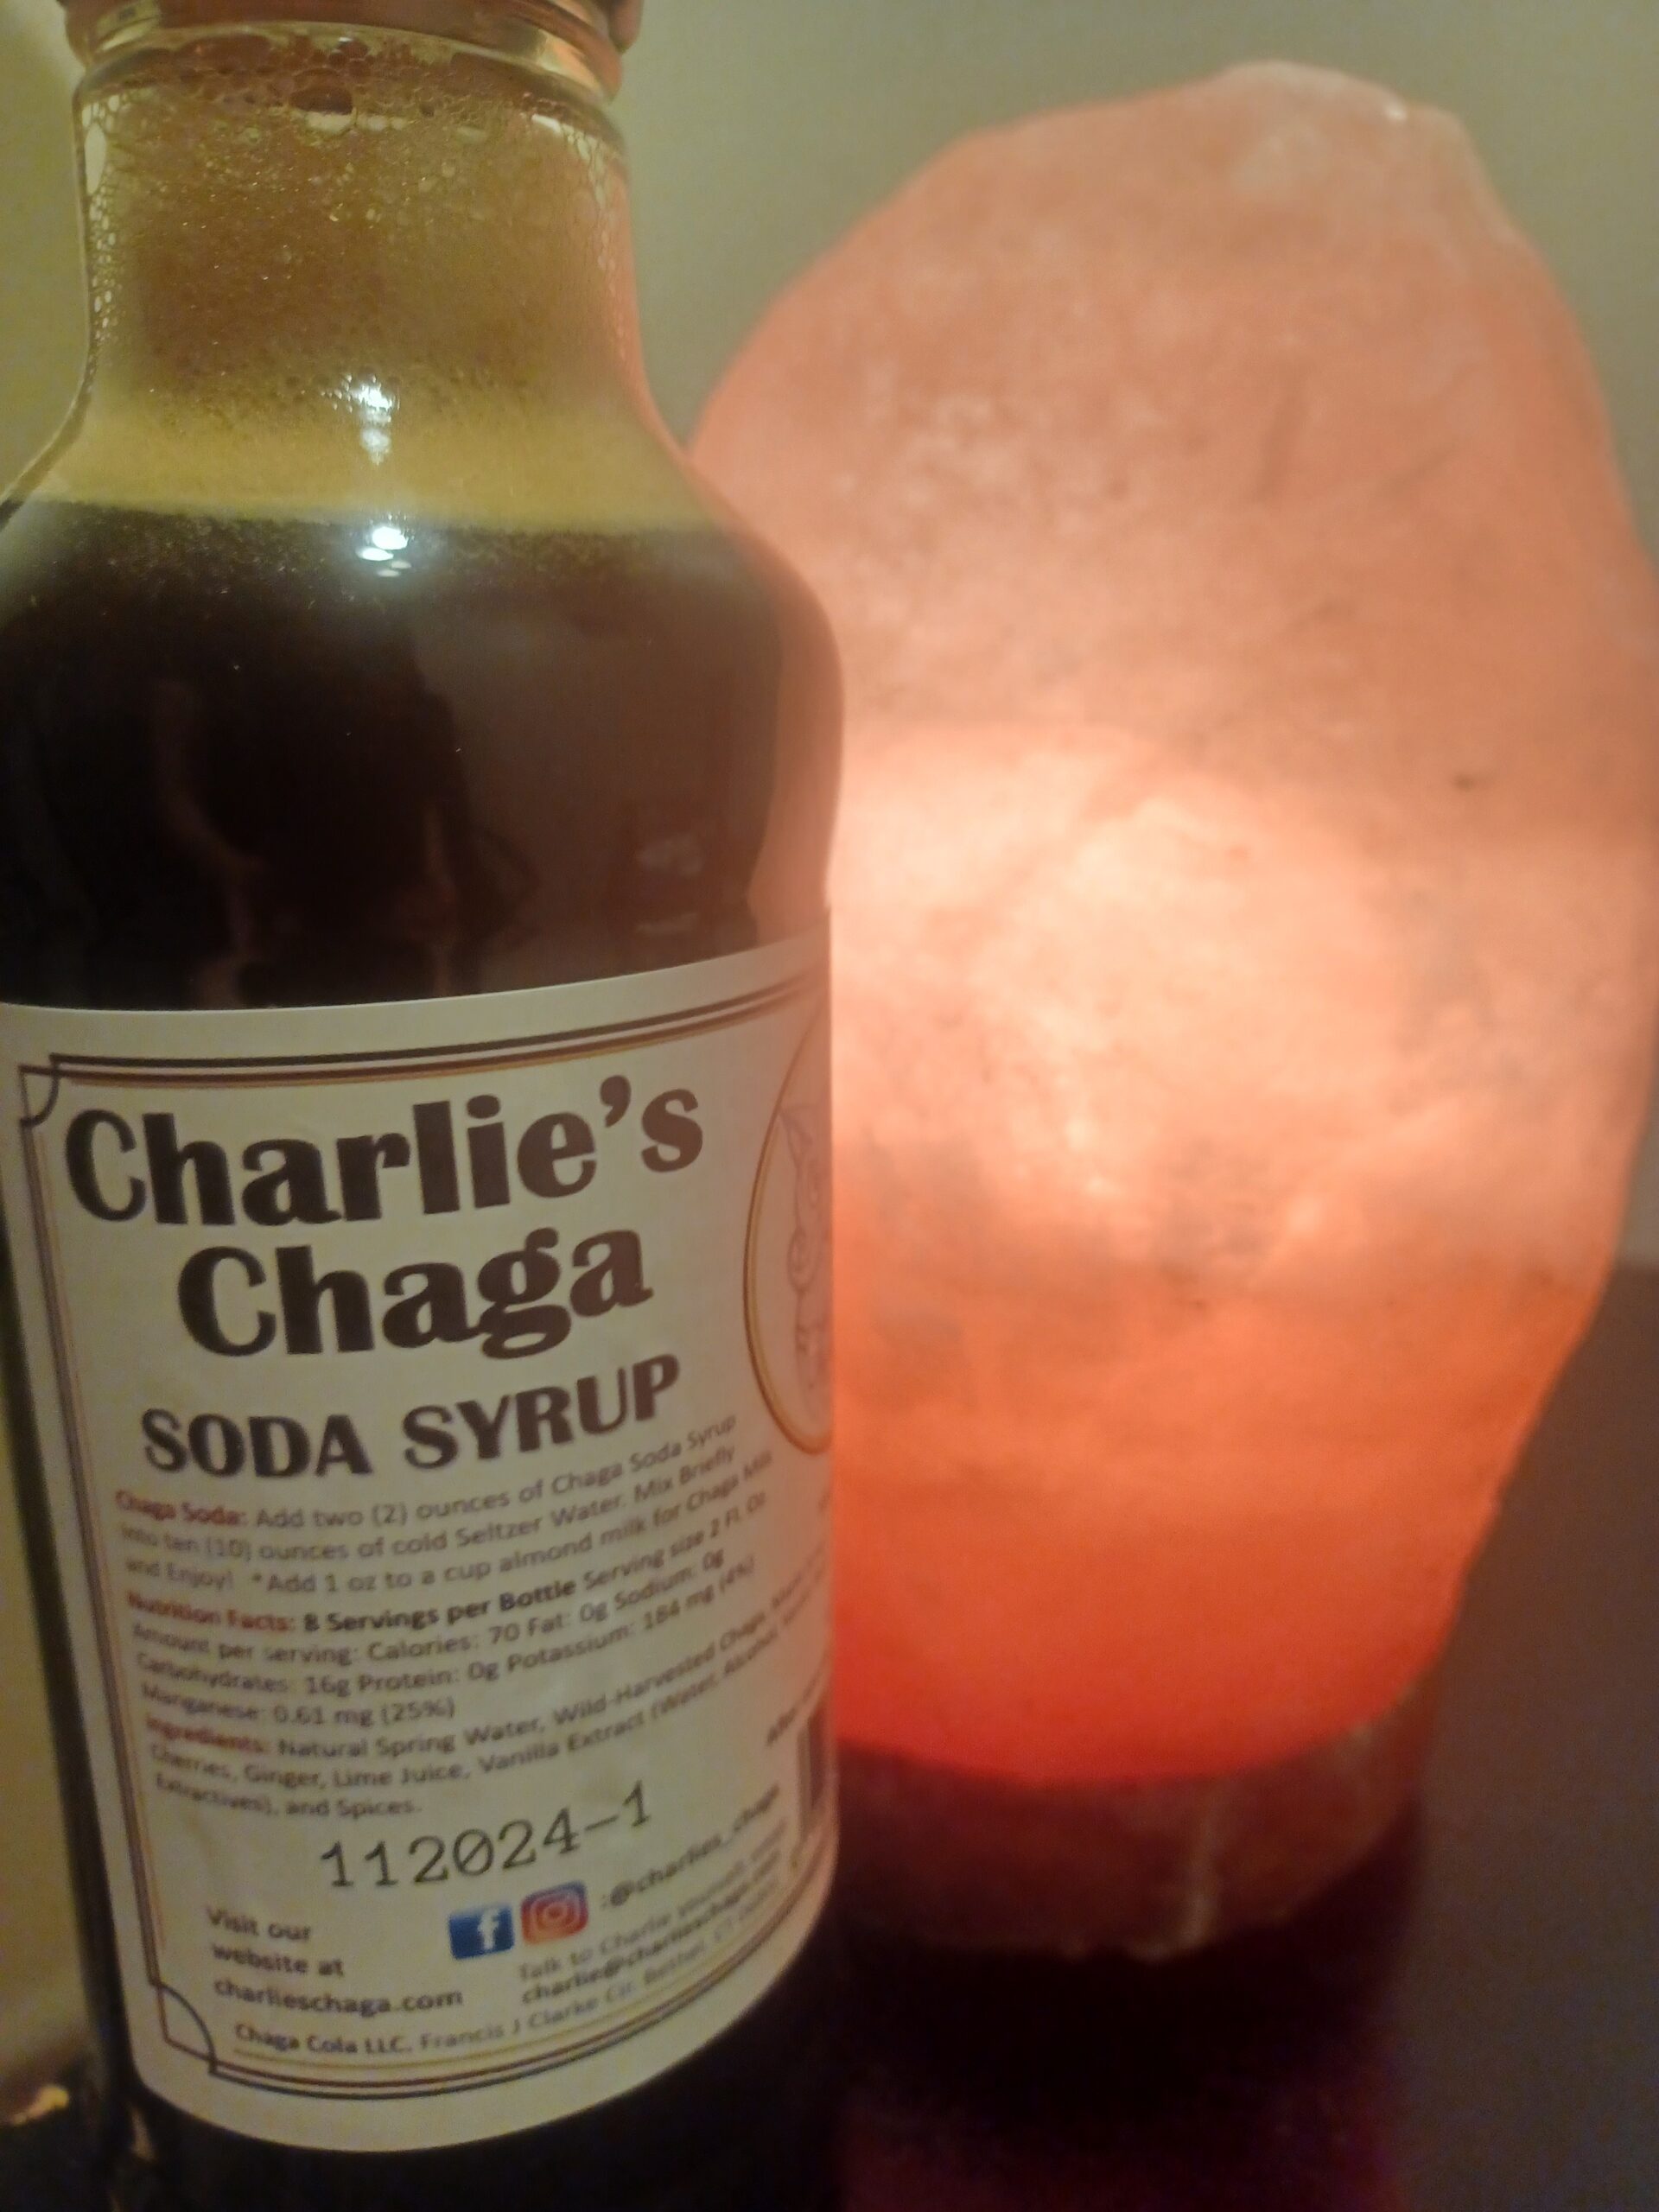 Charlie' Chaga makes incredible teas and sodas with the Chaga mushroom. 